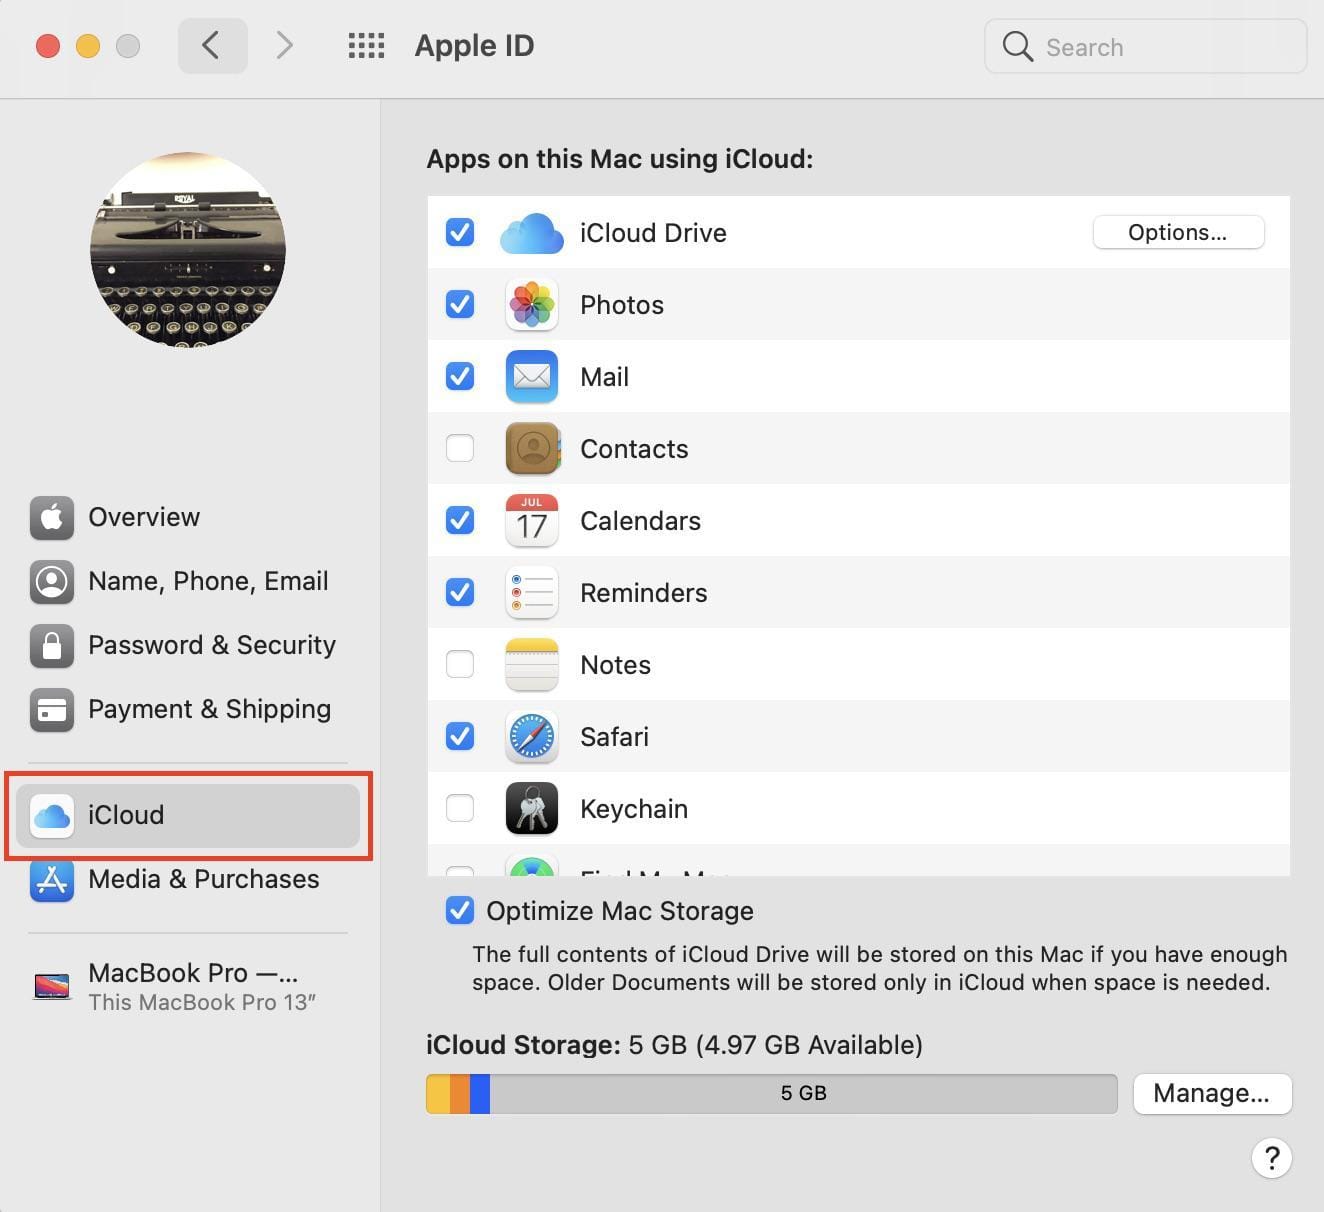 select apps using iCloud on Mac